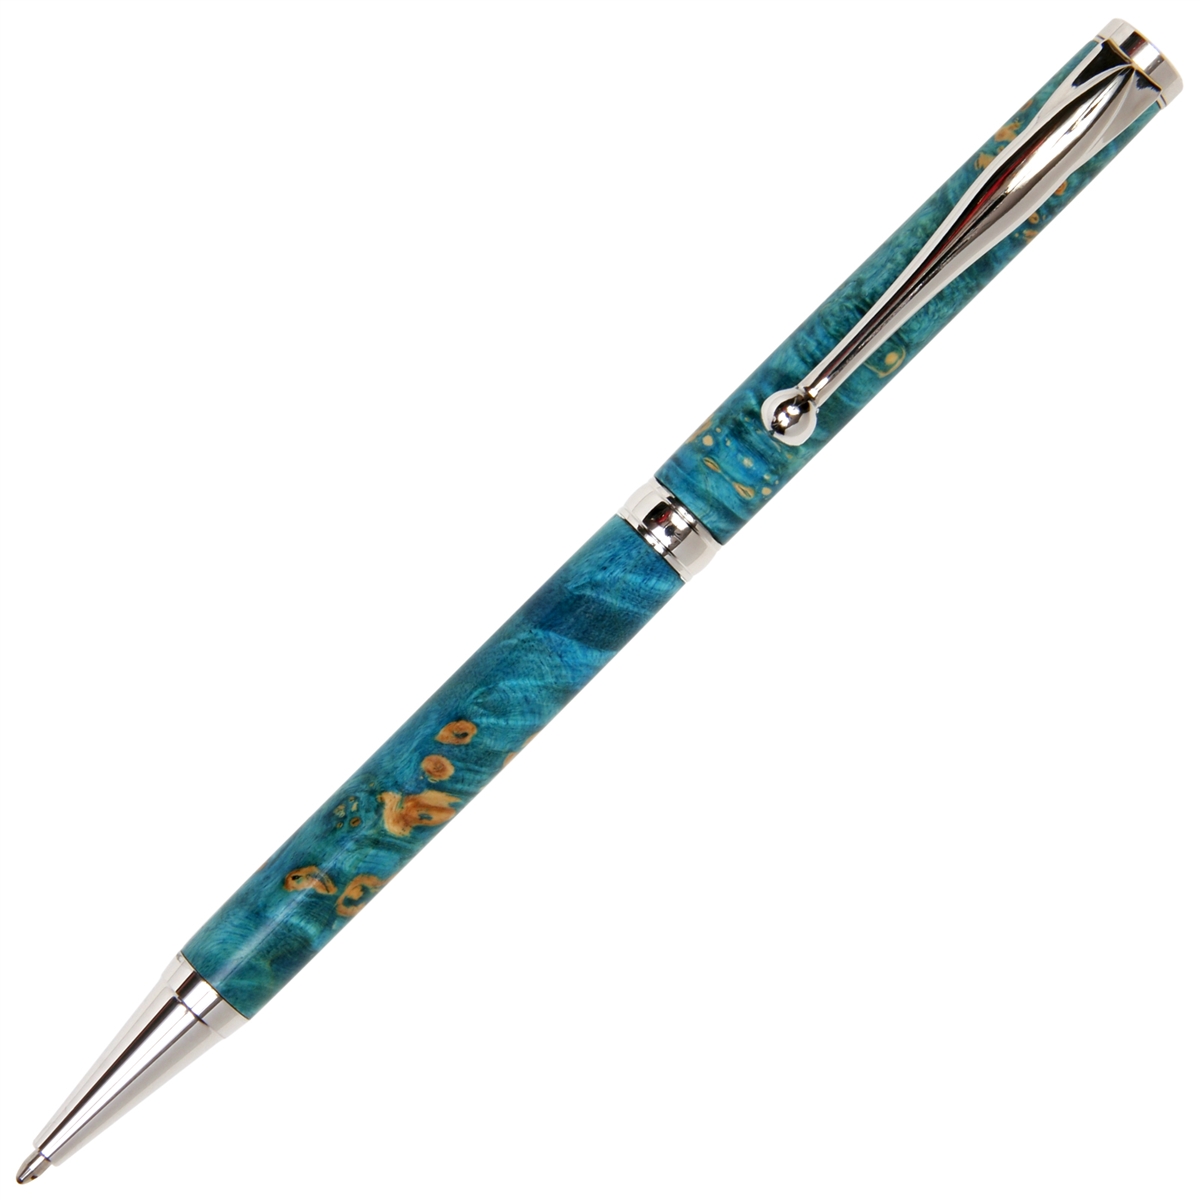 Slimline Twist Pen - Turquoise Box Elder